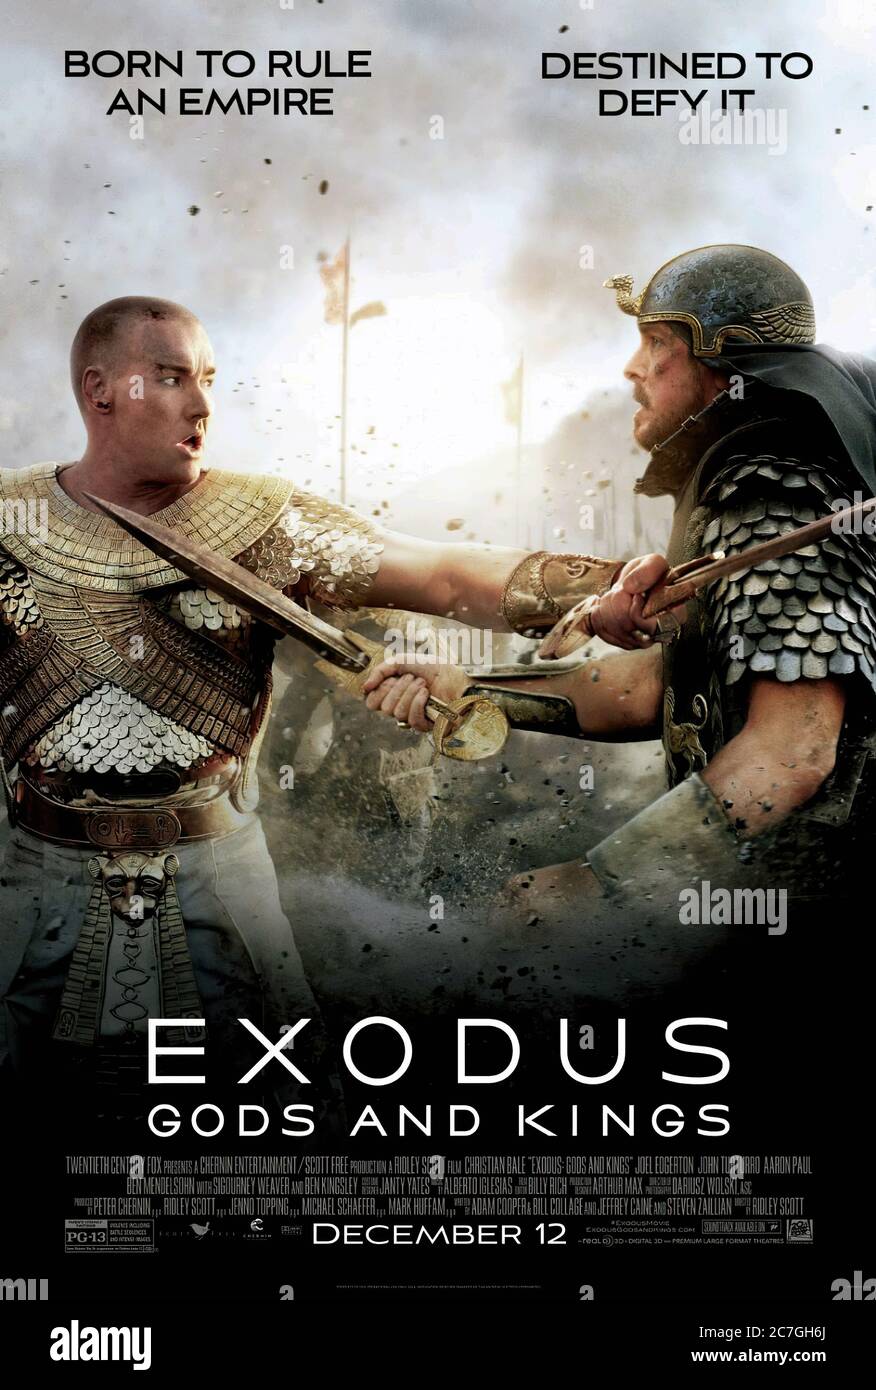 Exodus Gods and Kings - Movie Poster Stock Photo